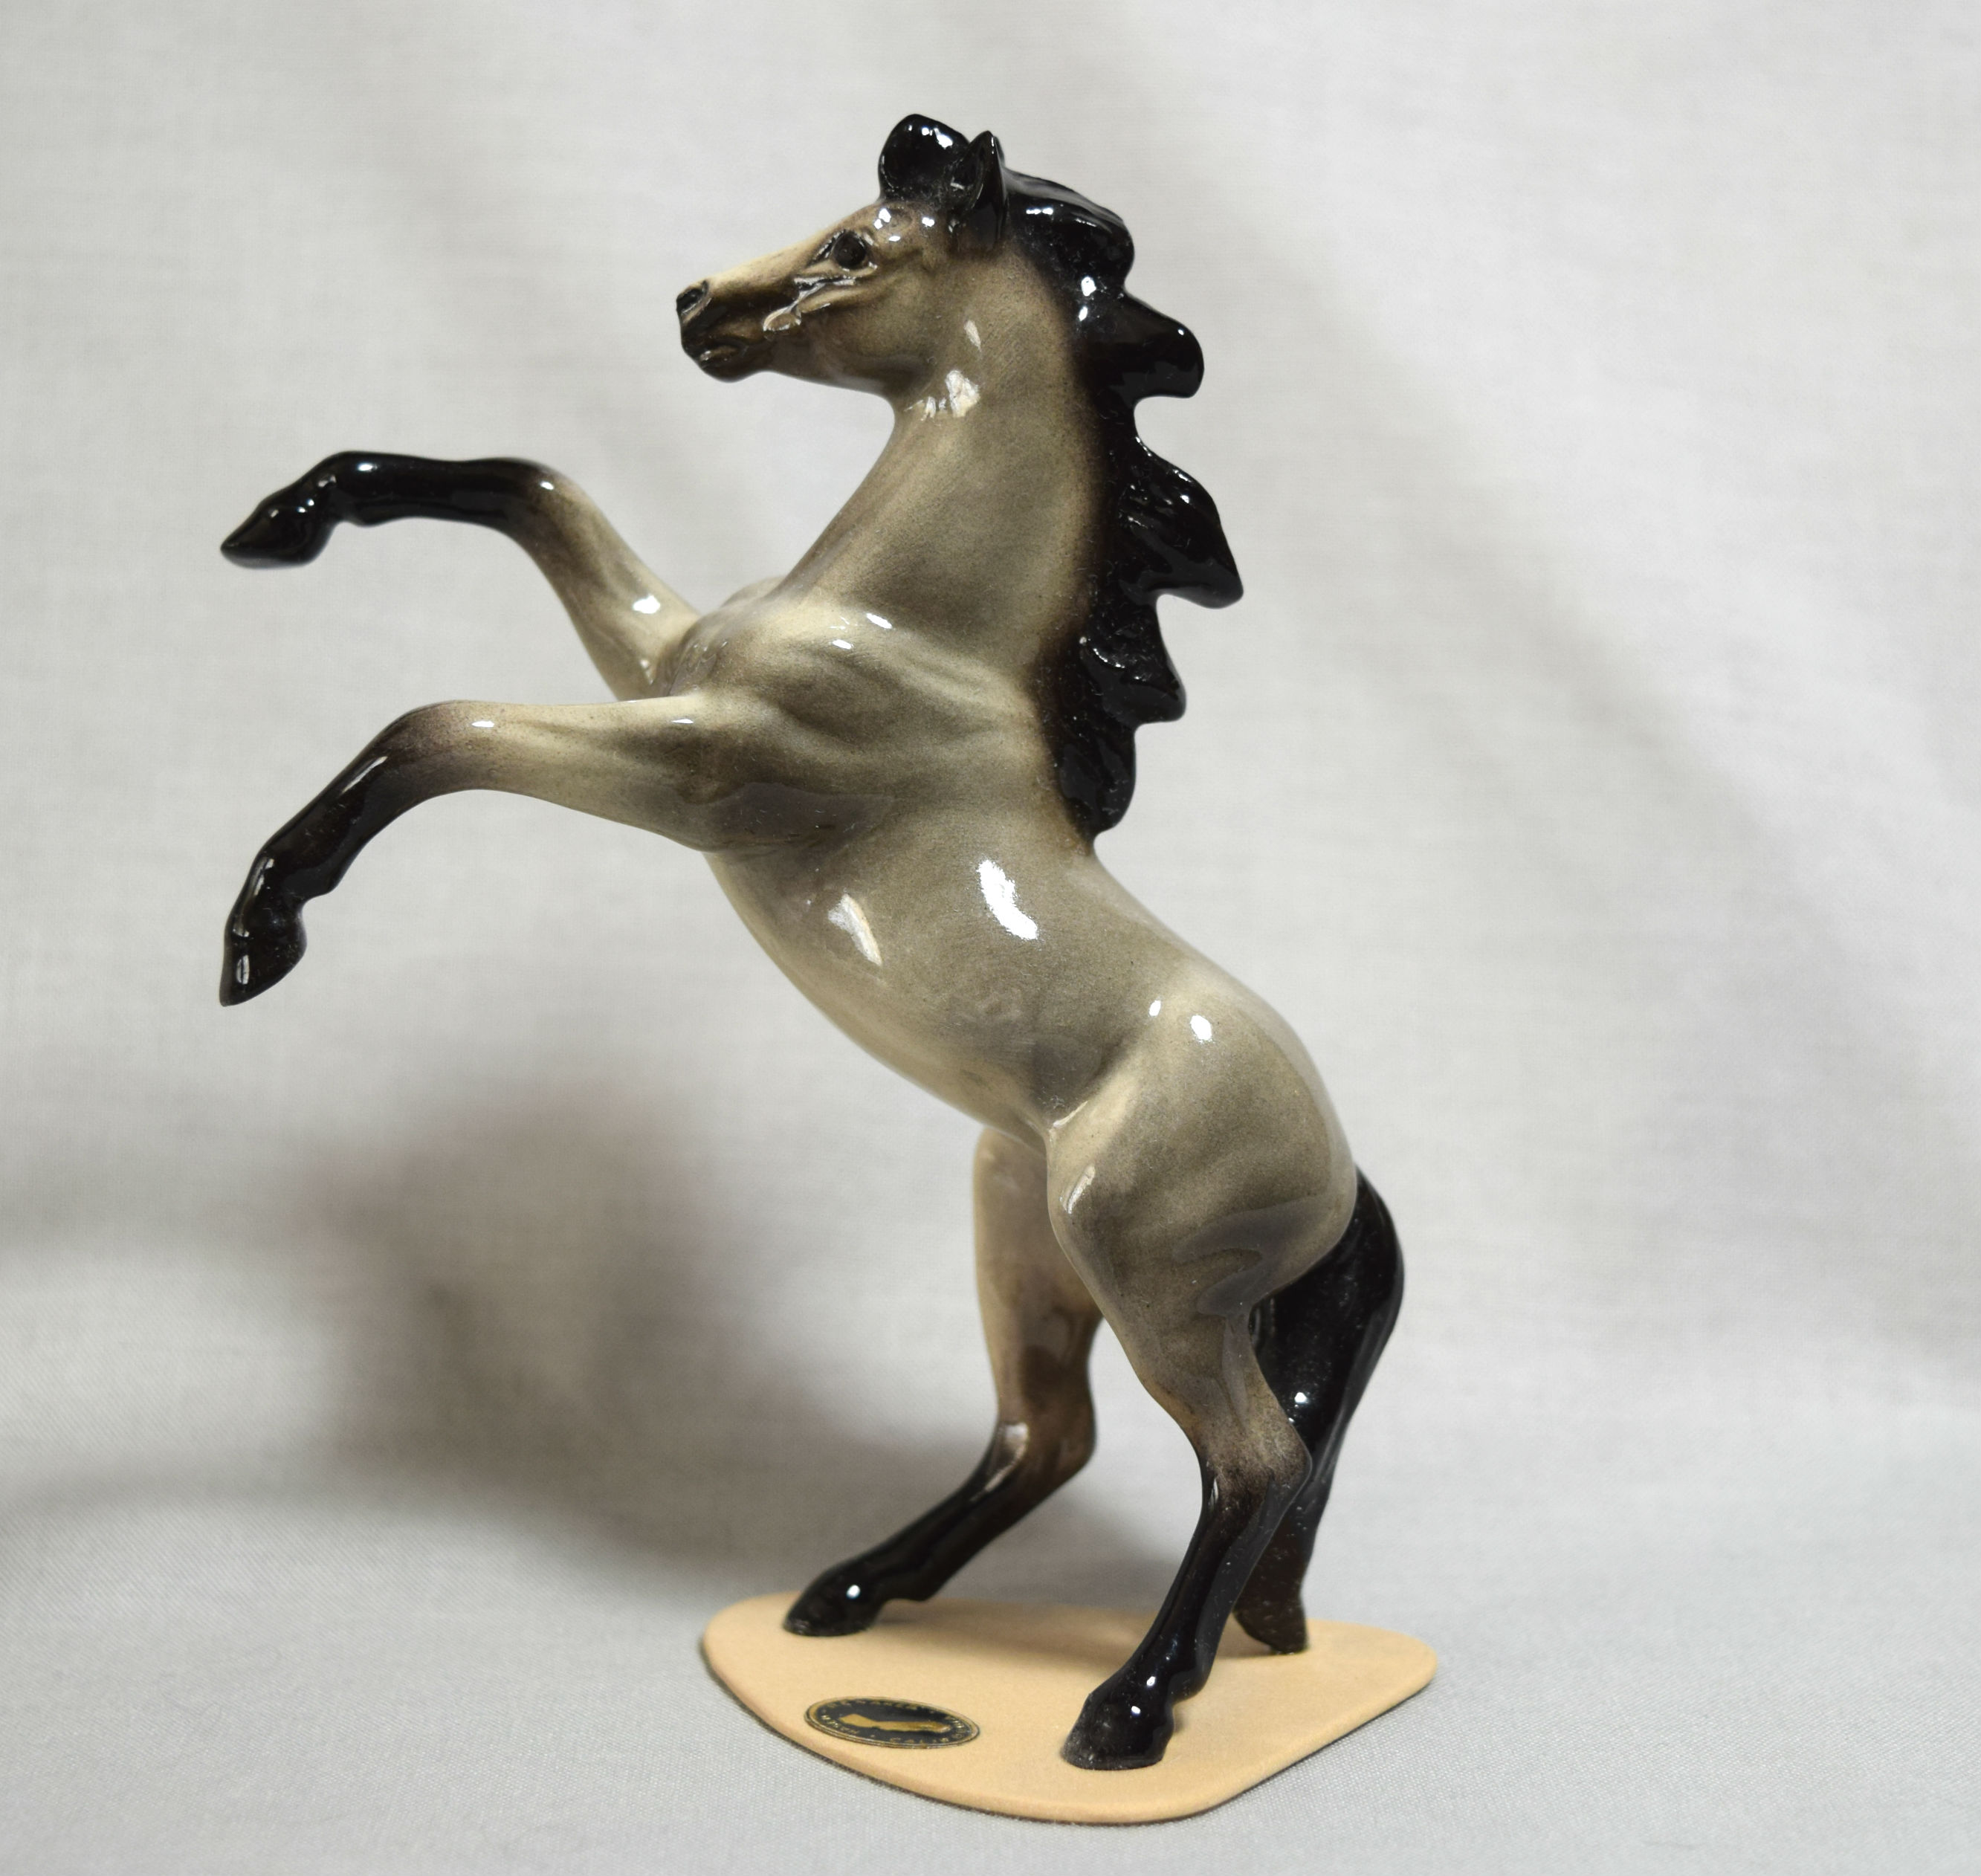 Rearing Horse, “Skywalker”-image